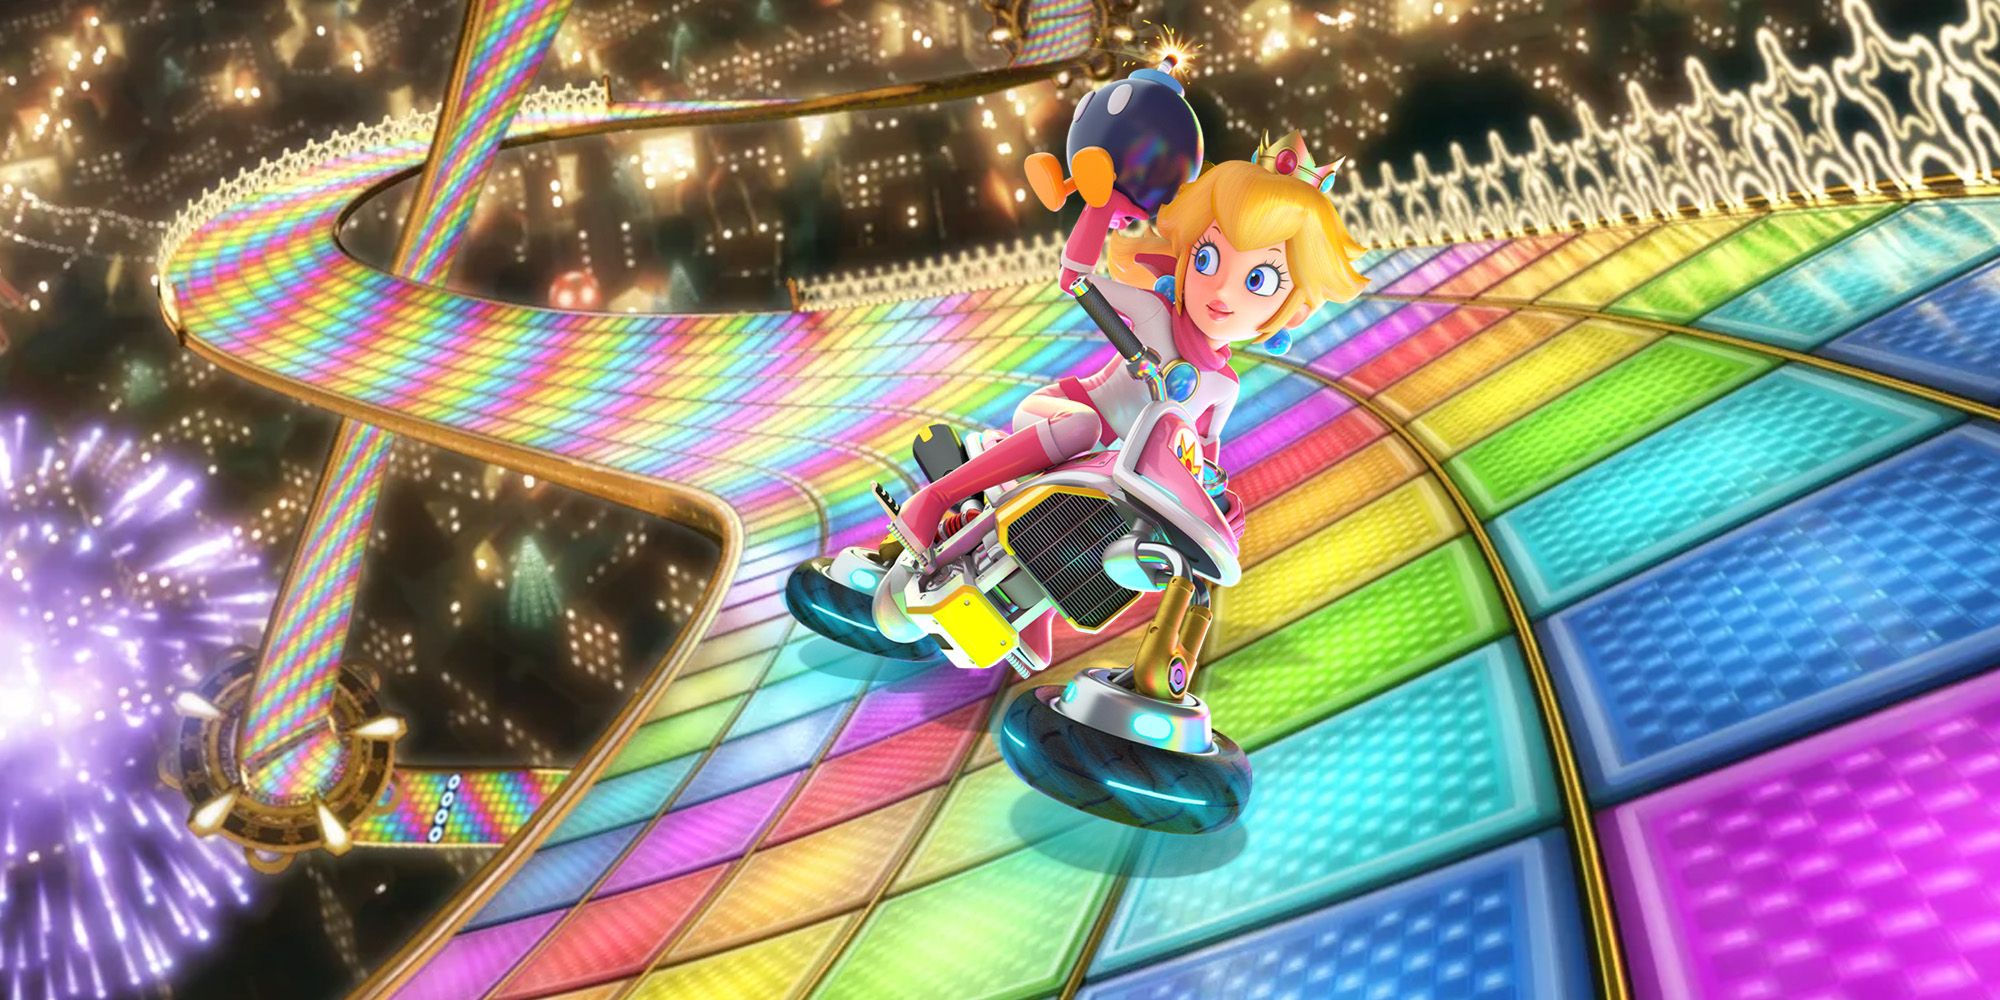 Princess Peach in her Jump Suit in Mario Kart 8 Deluxe